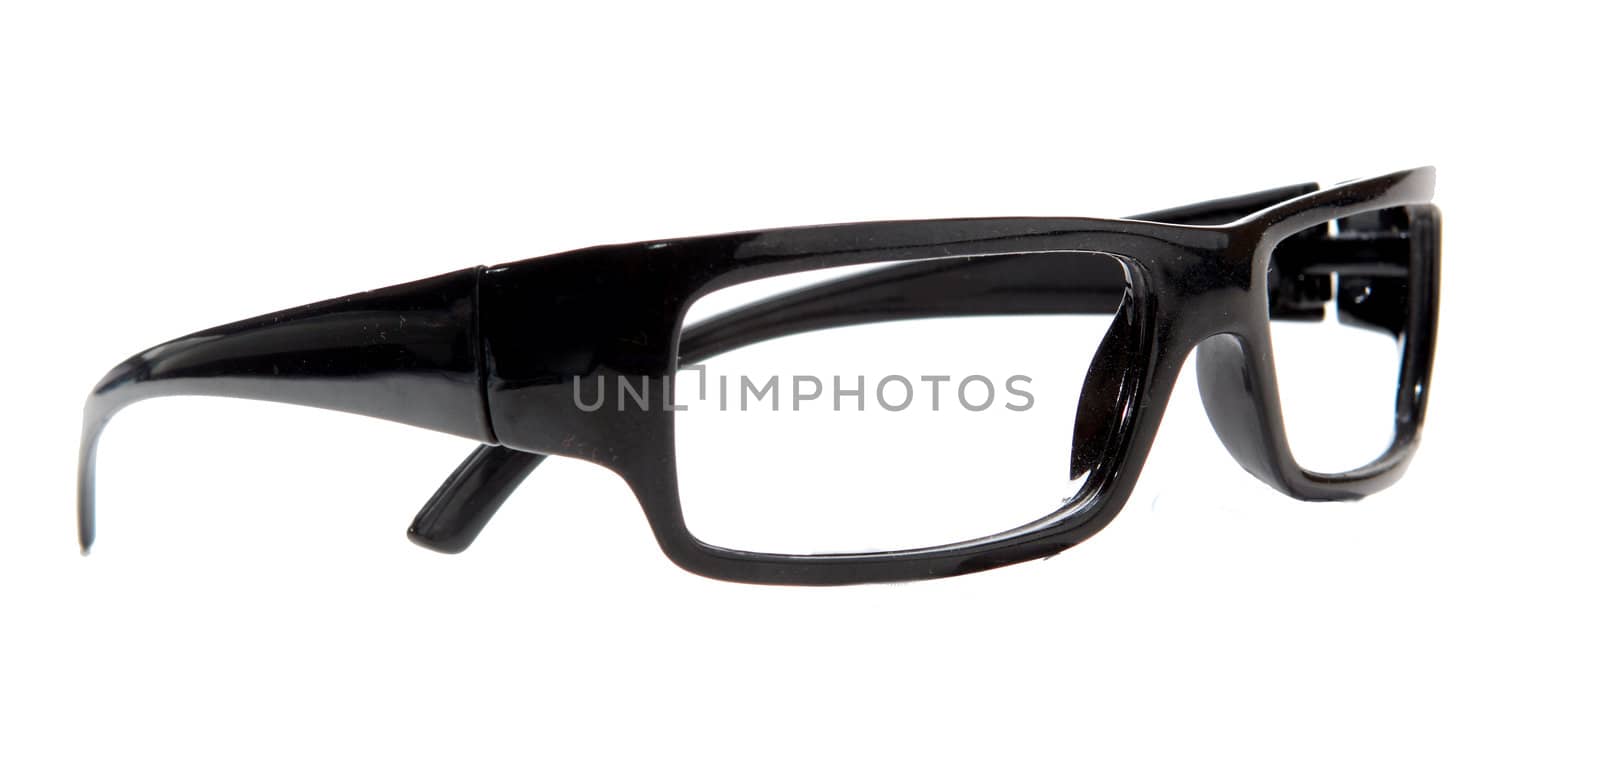 black glasses on a white background 